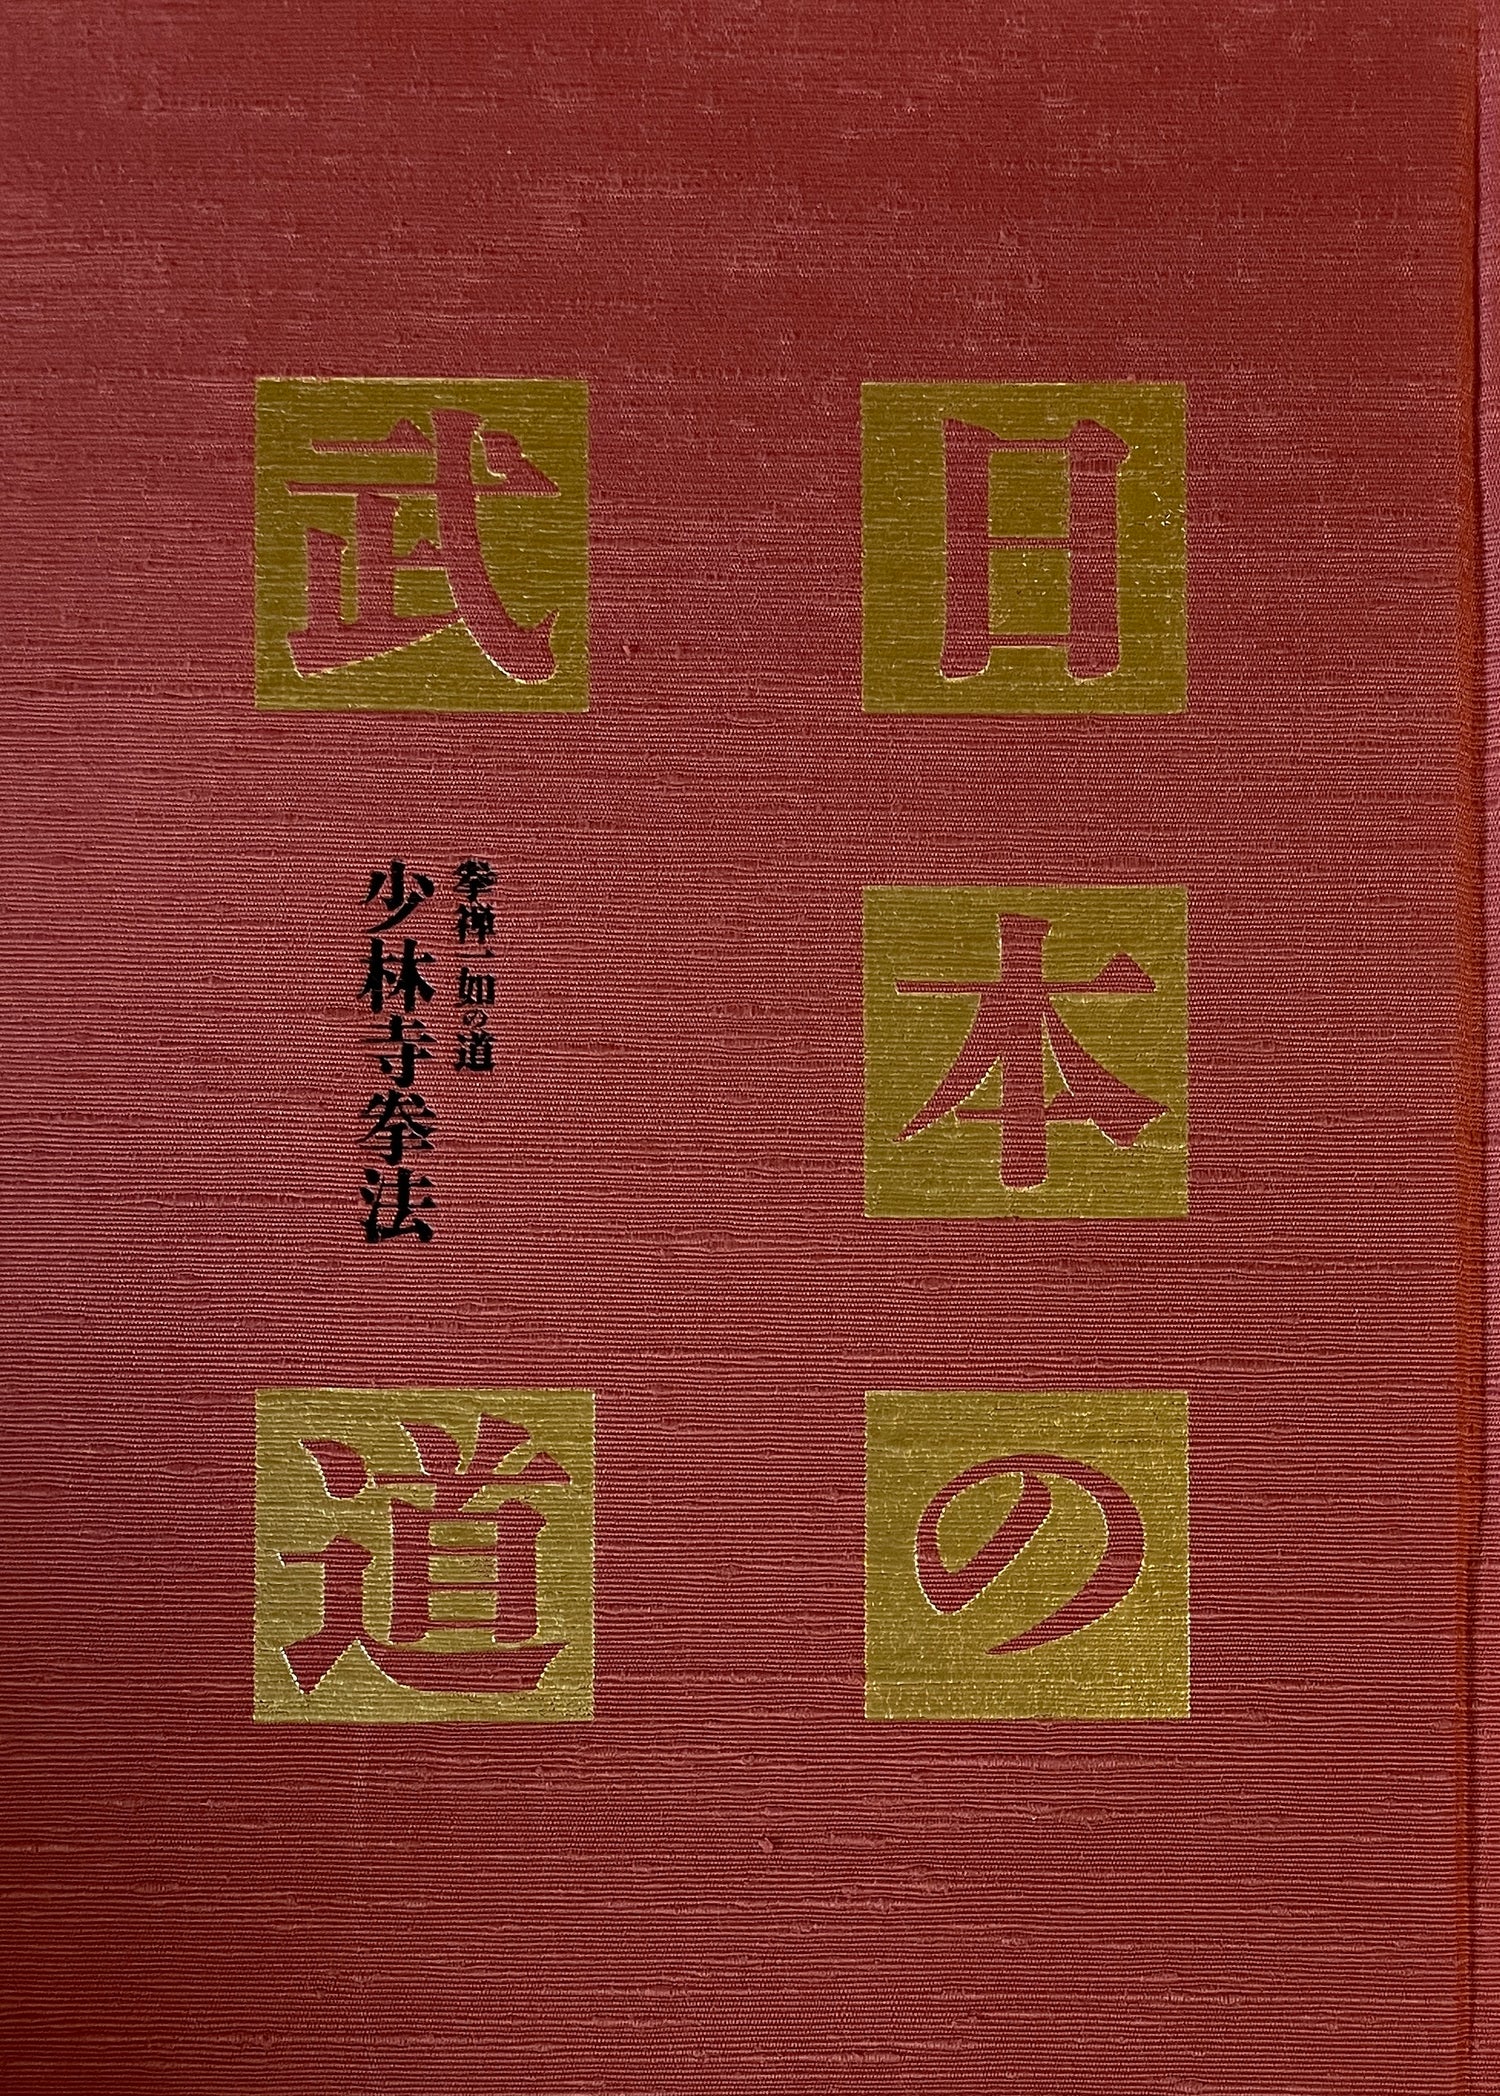 日本の武道 Book 10: 少林寺拳法 (中古) 